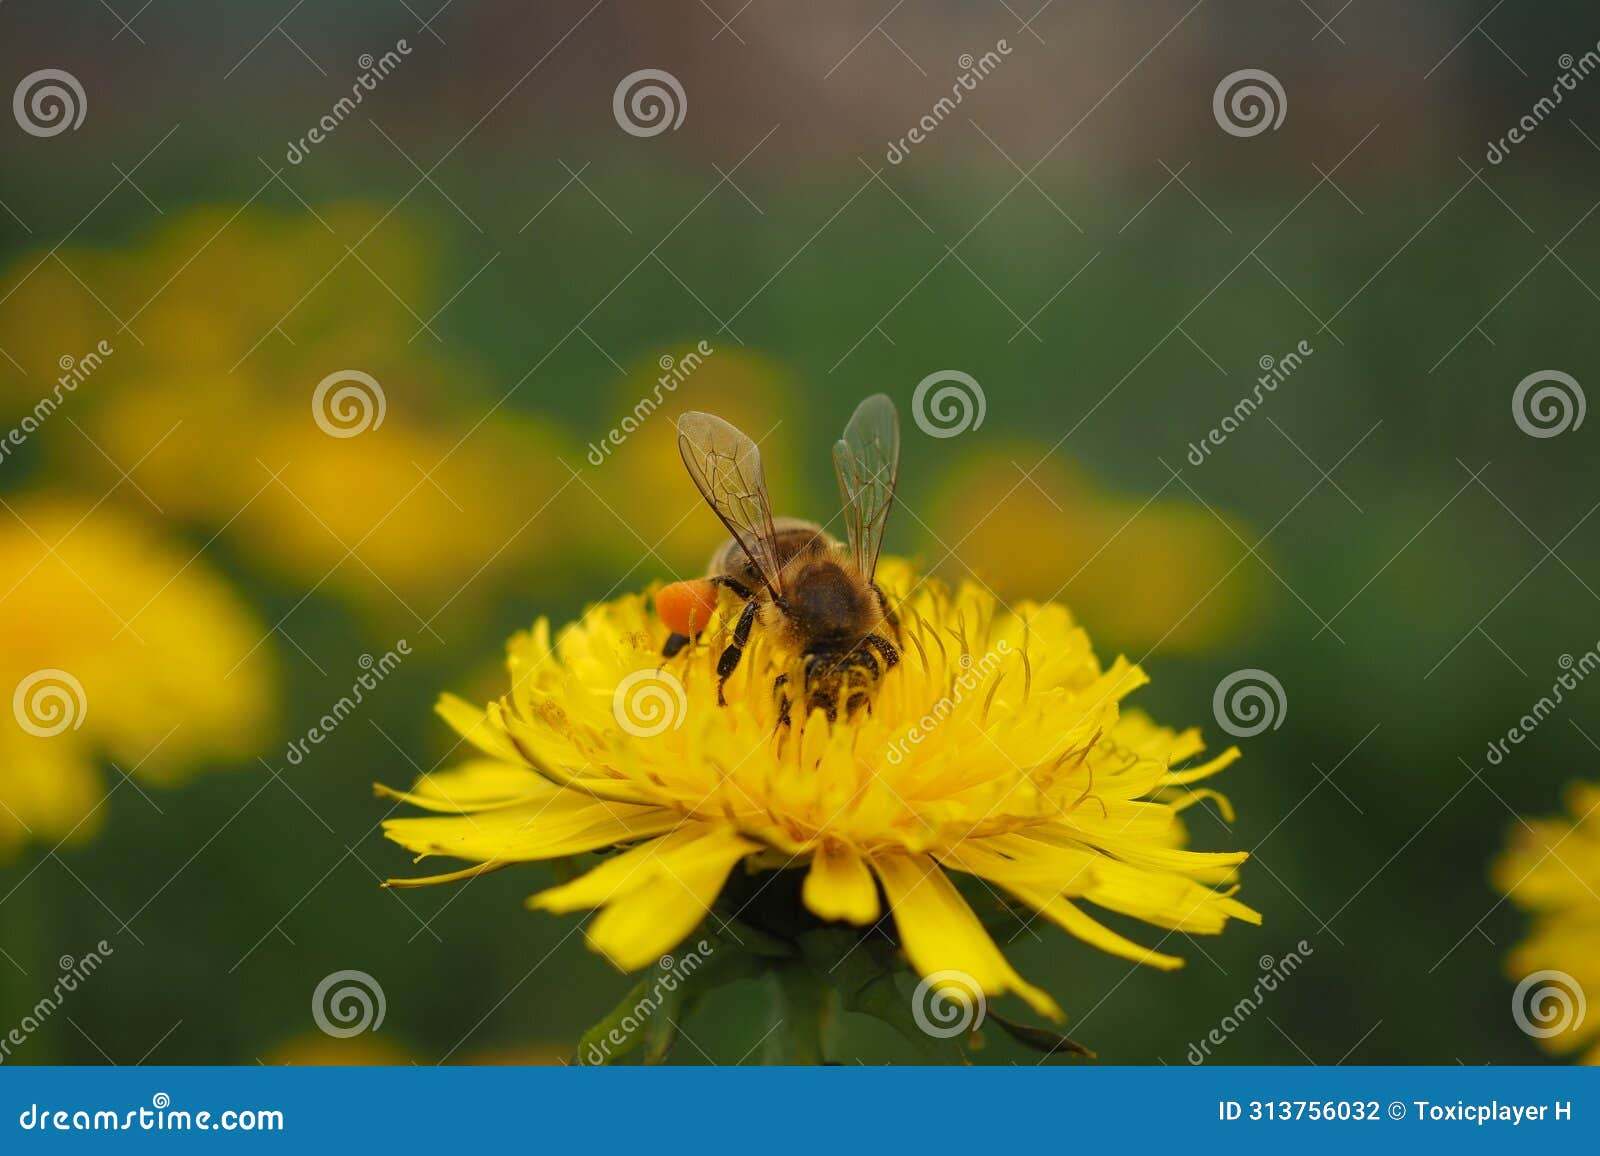 busy bee with polen satchels on dandelion